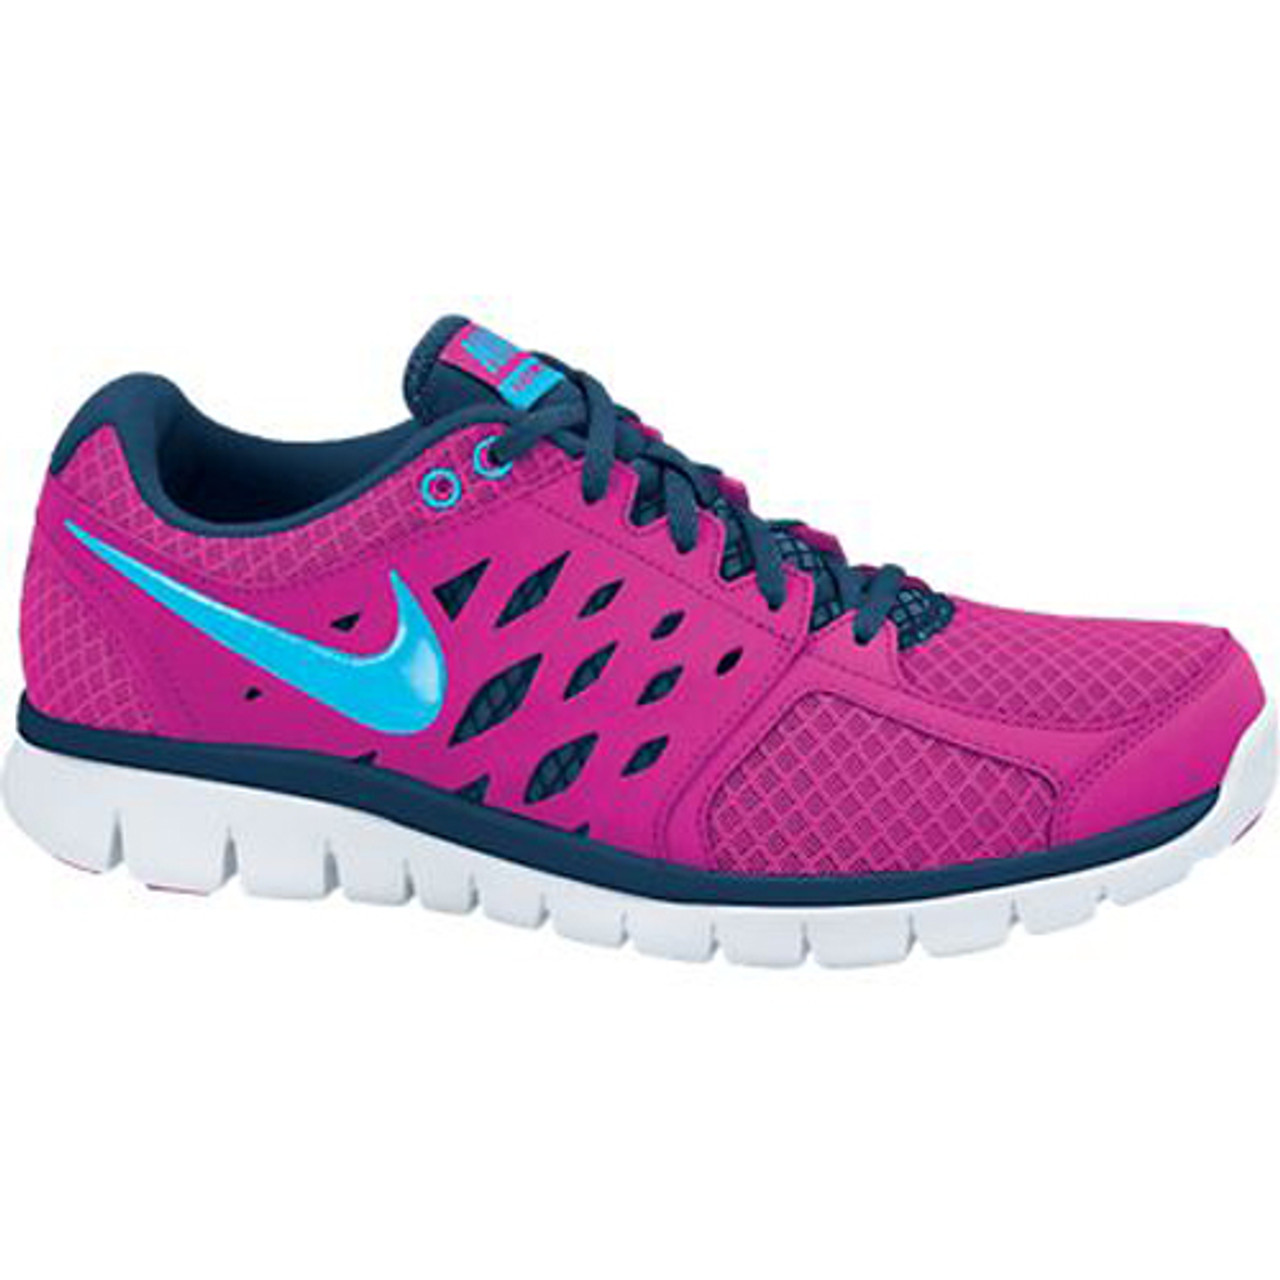 Nike Flex 2013 Pink/Blue Ladies Running - Pink/Brave Blue/White/Gamma Blue | Discount Nike Ladies Athletic & More - Shoolu.com |